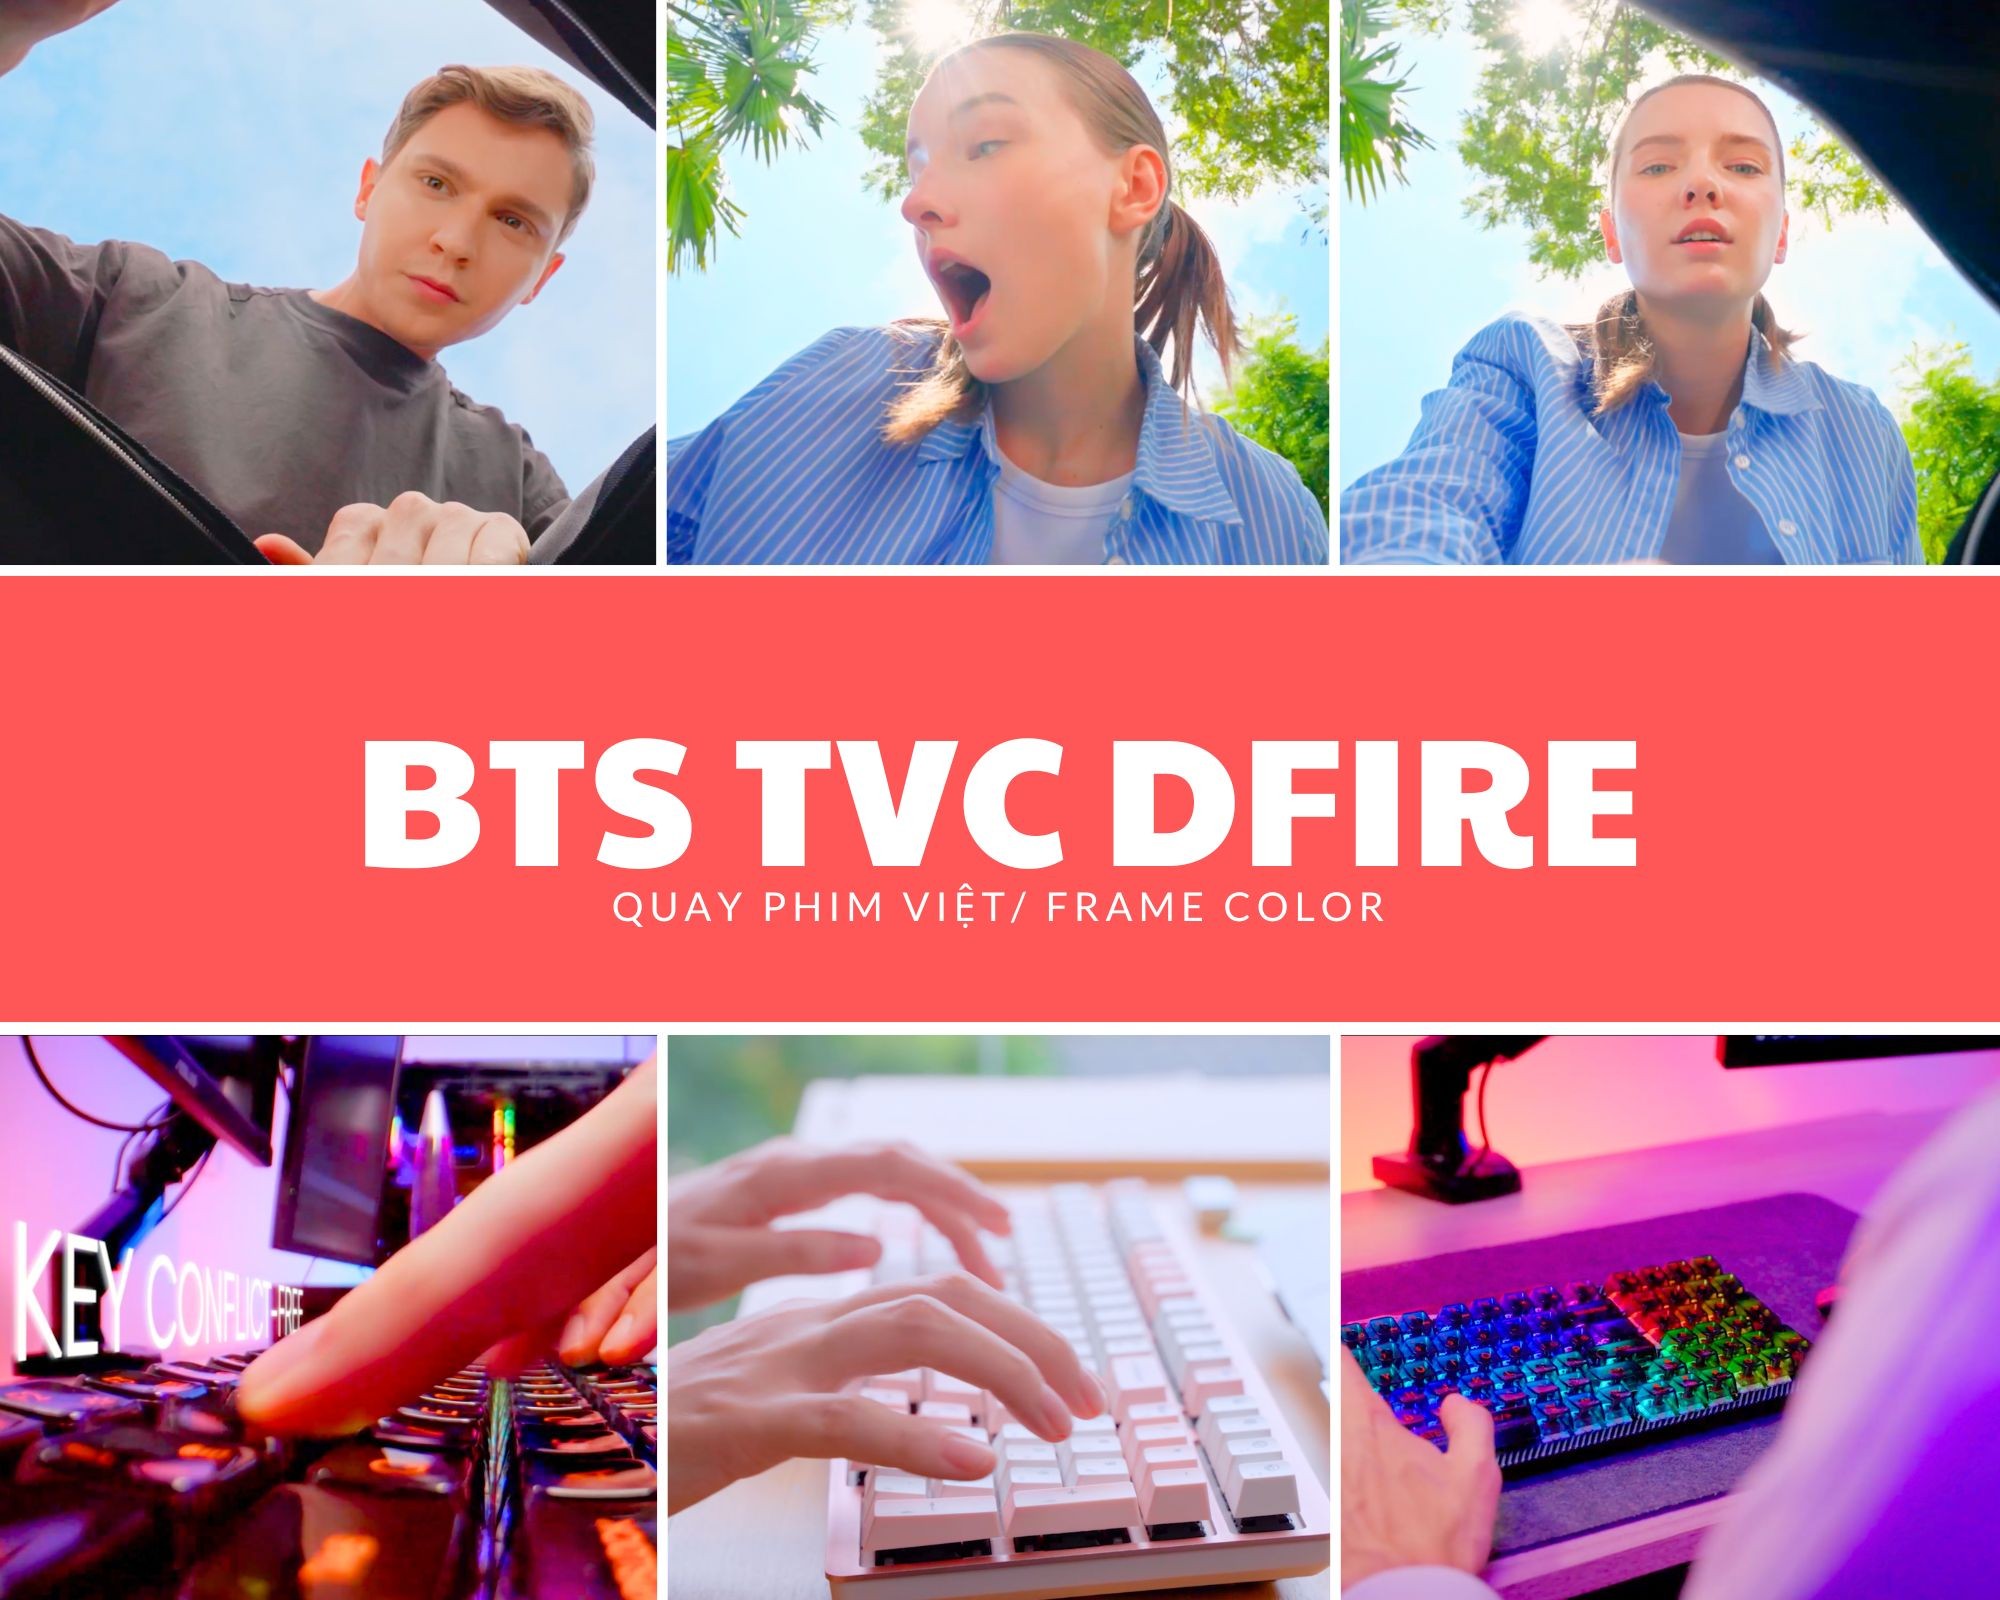 BTS TVC Dfire